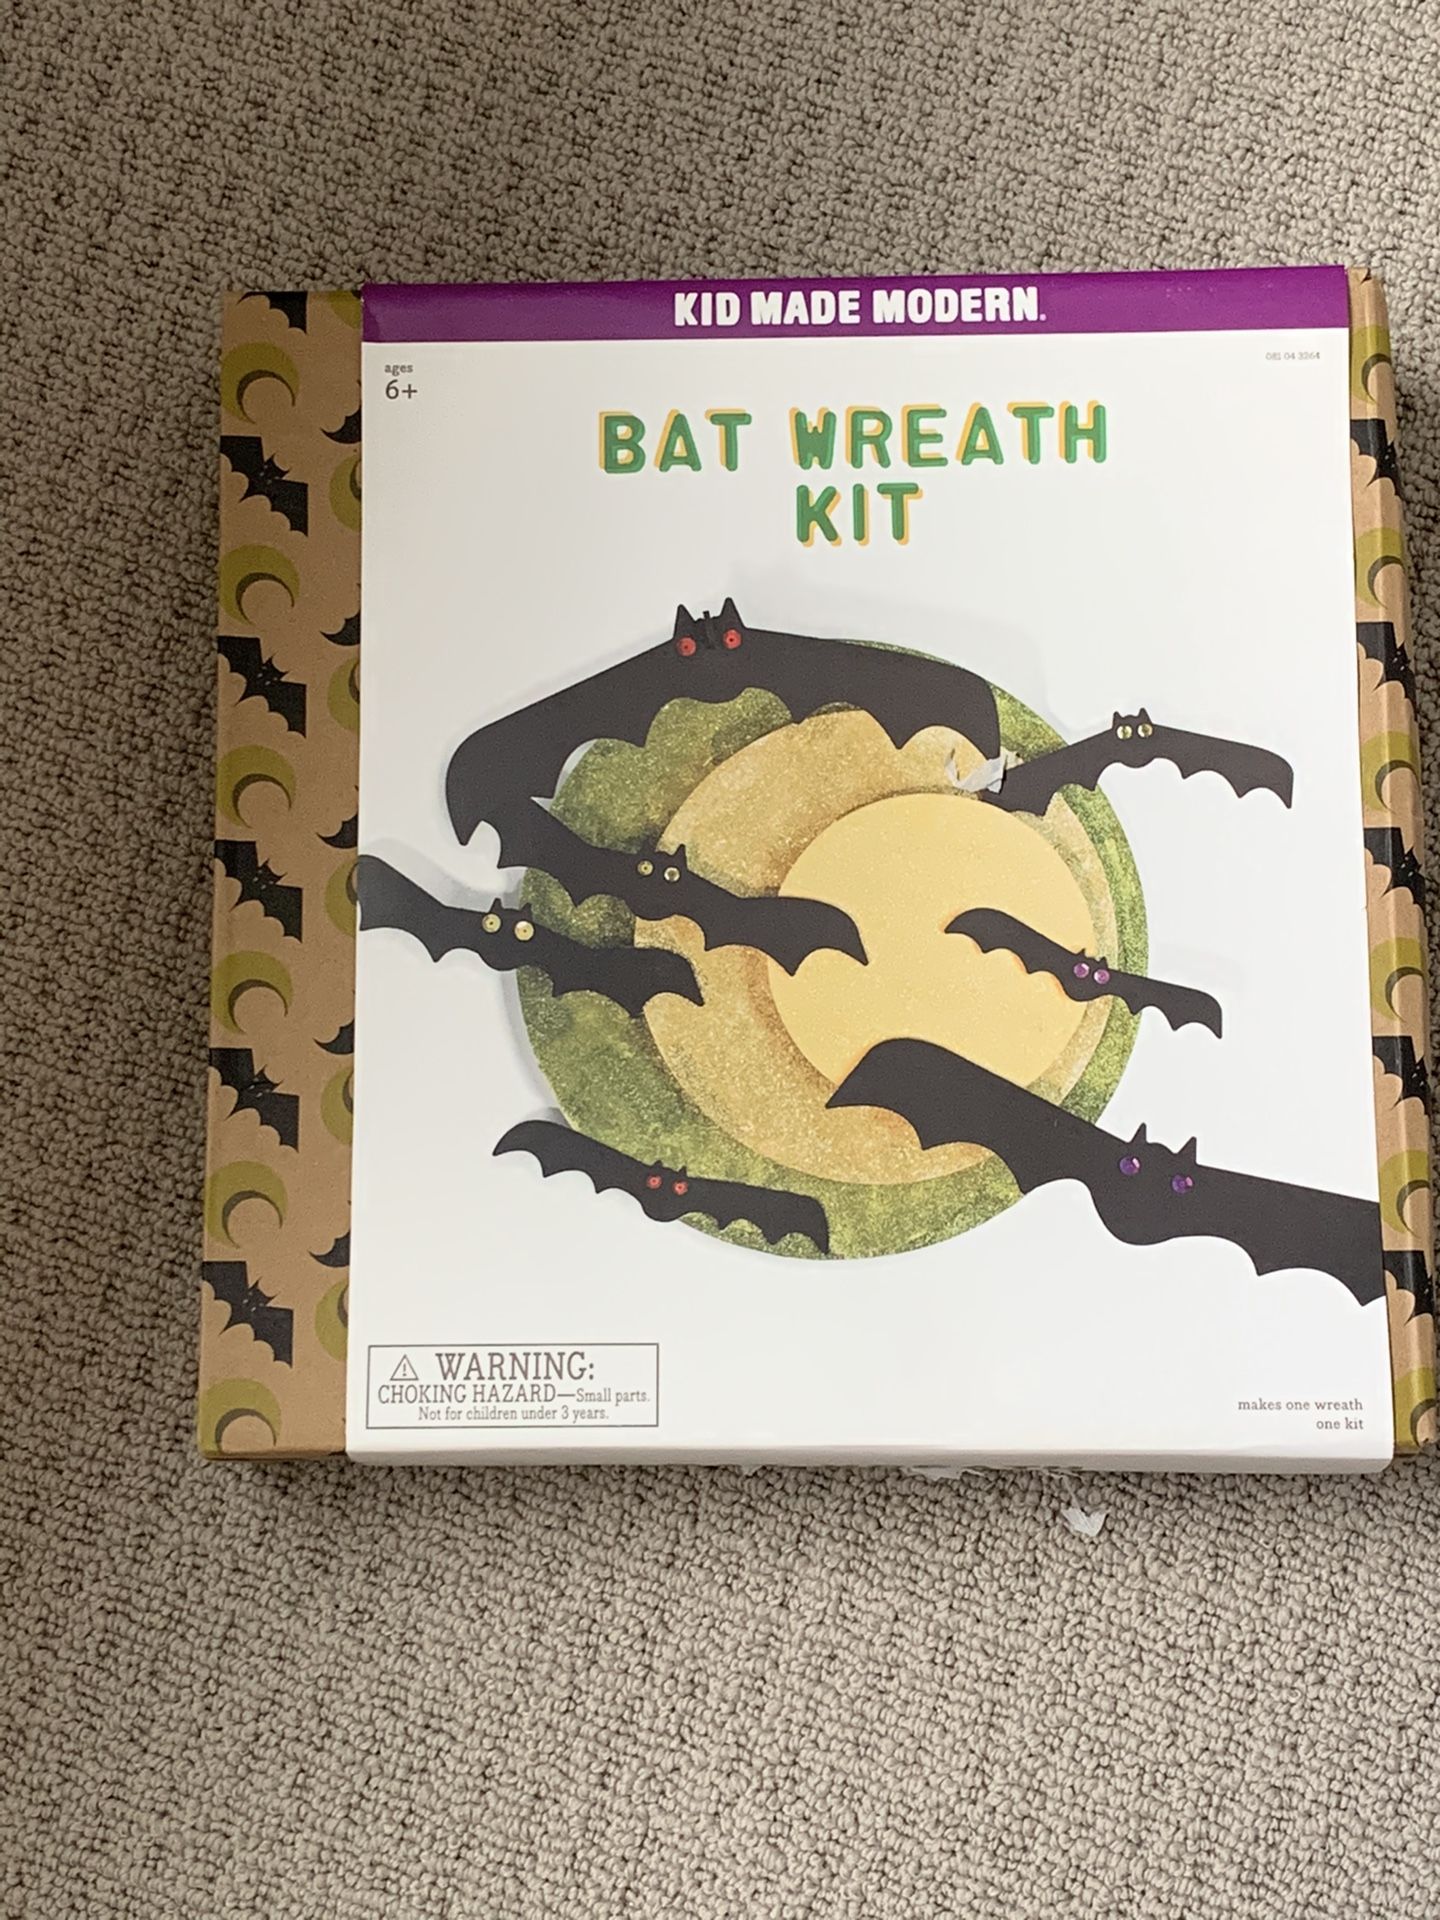 Brand new Bat wreath kit